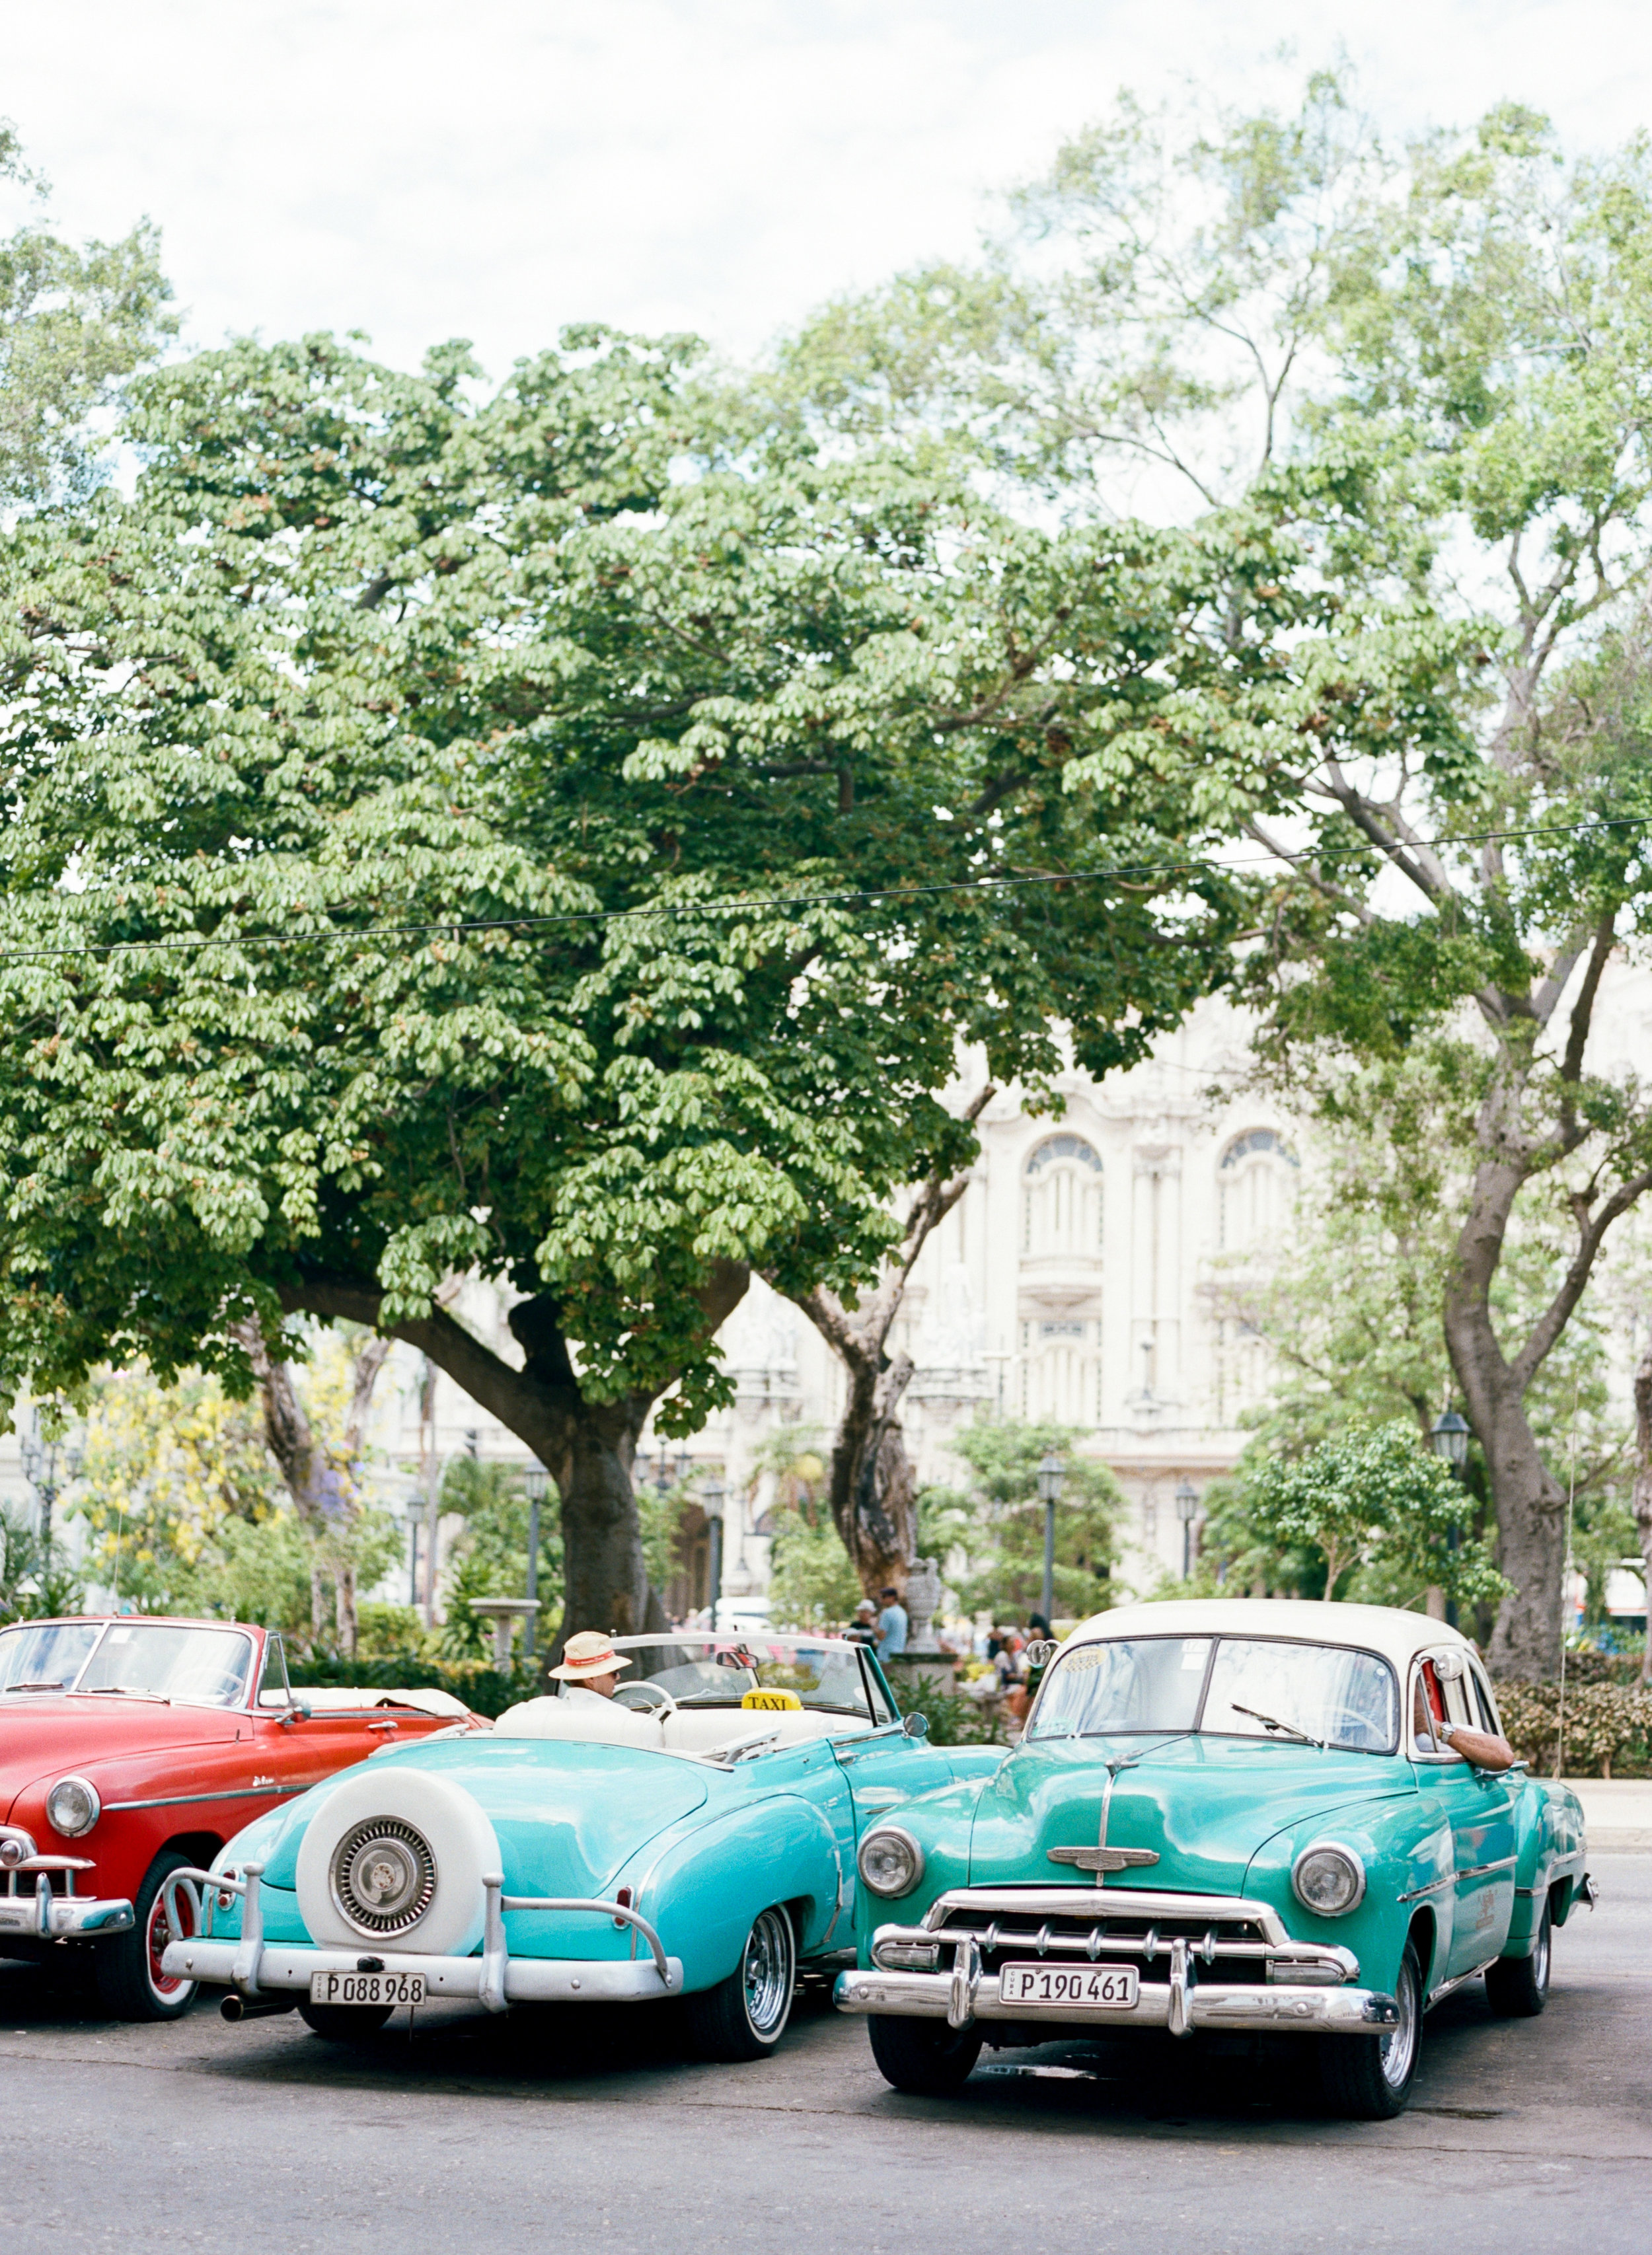 Cuba-Travel-photography-rachael-mcitnosh-photography-19.jpg